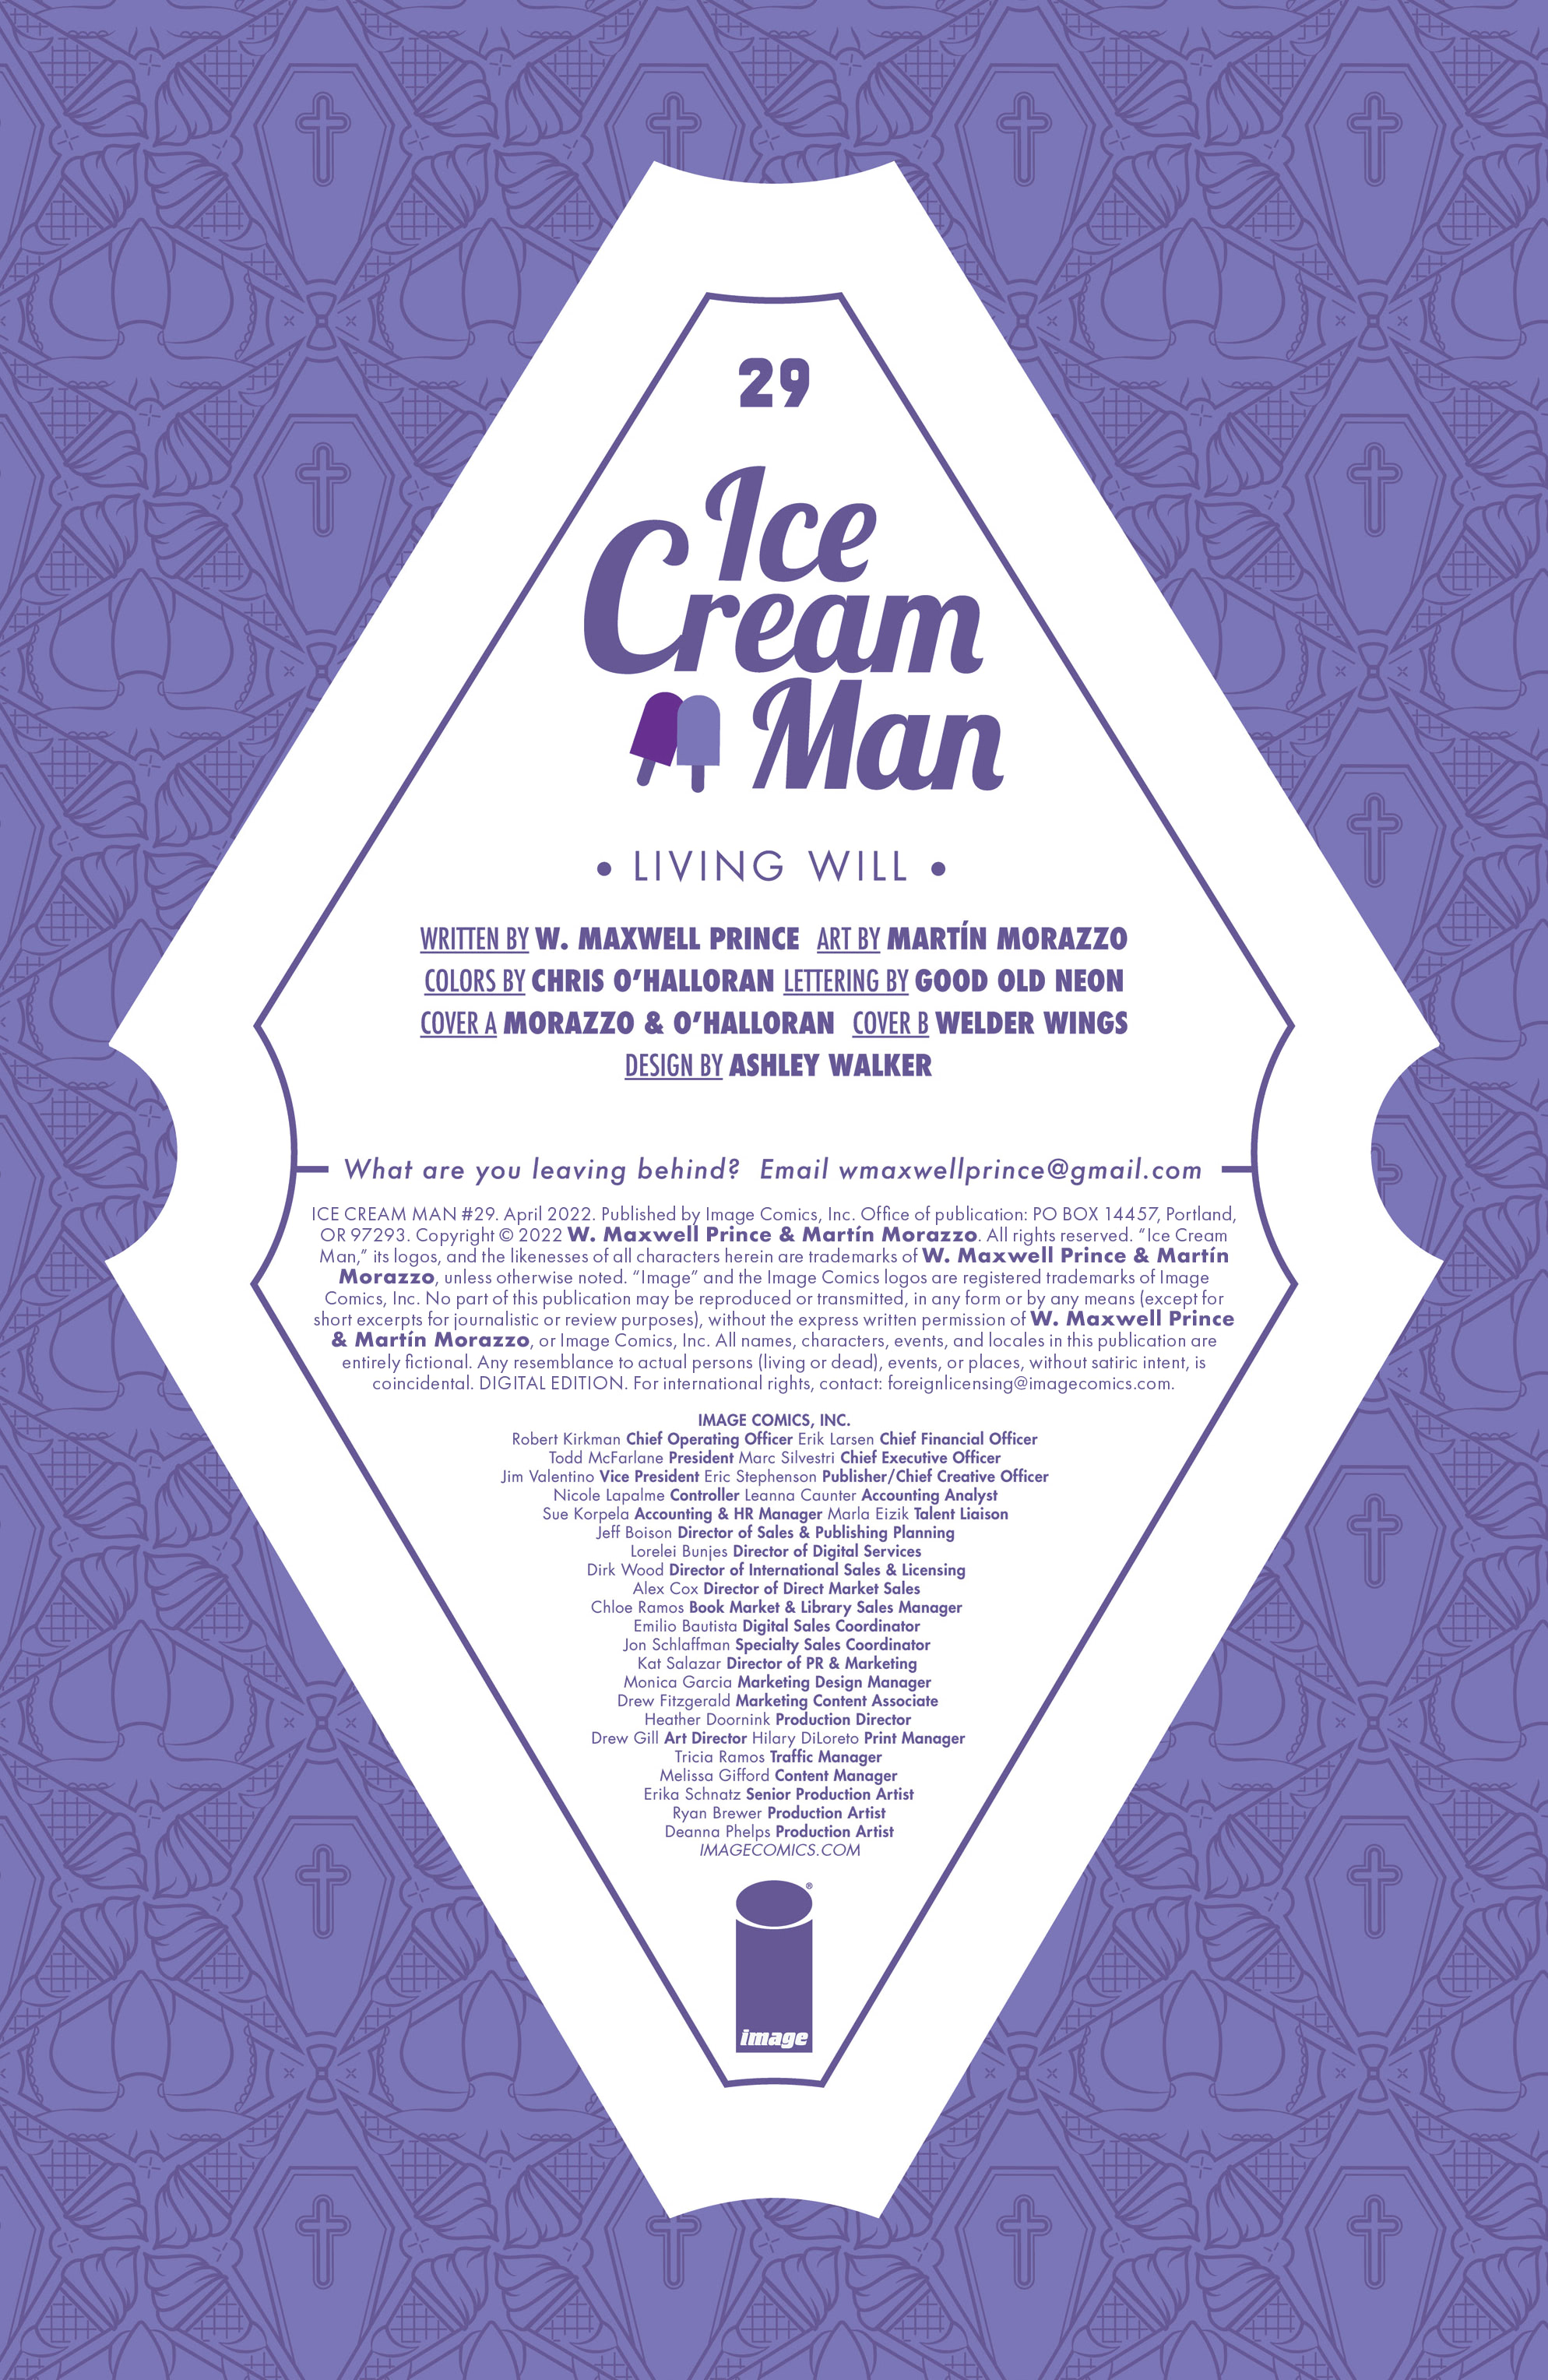 Read online Ice Cream Man comic -  Issue #29 - 2